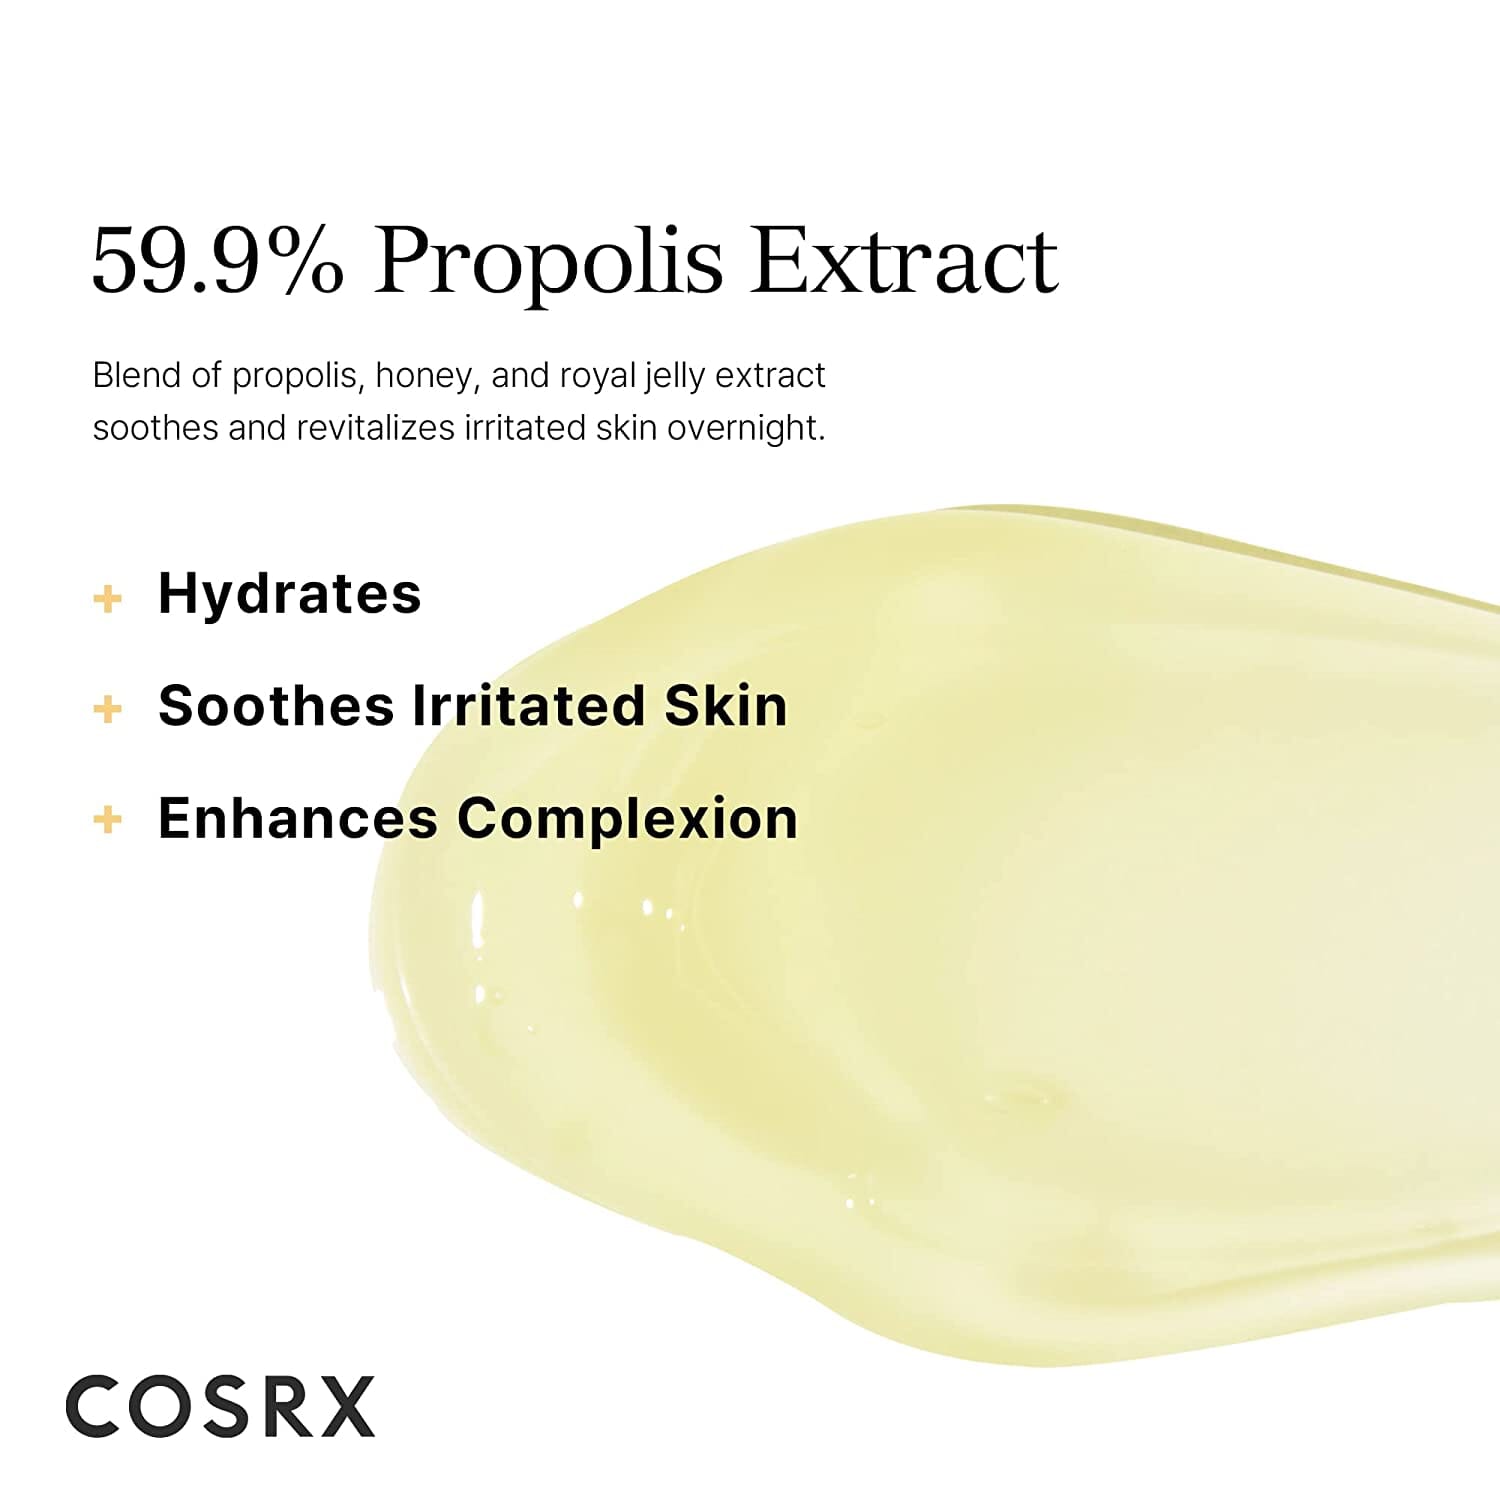 COSRX Full Fit Propolis Honey Overnight Mask 60ml Skin Care COSRX ORION XO Sri Lanka